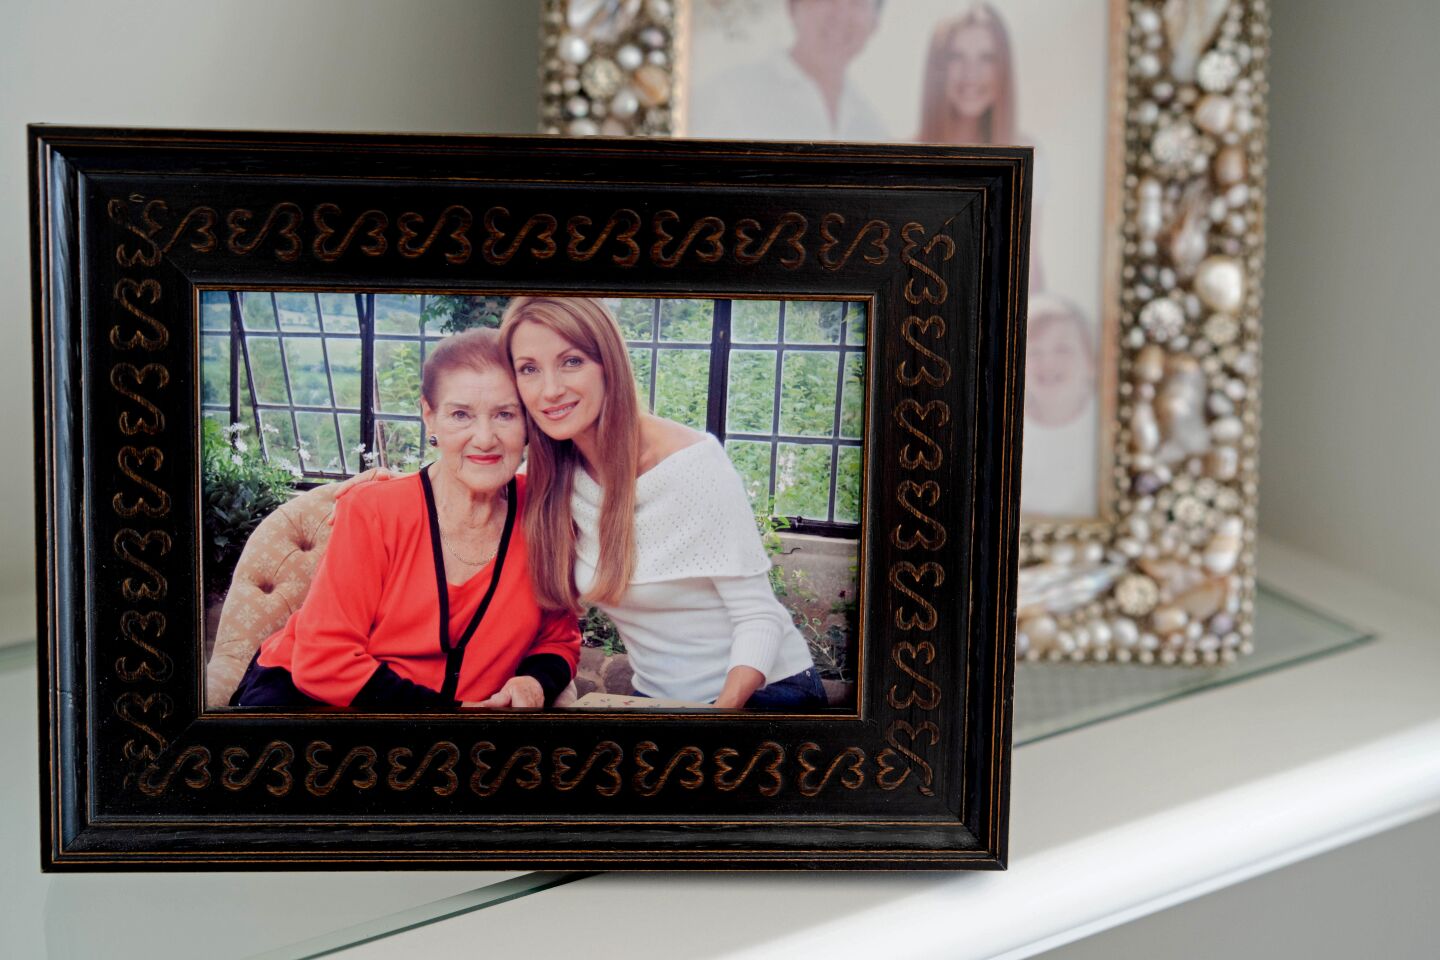 Framed photographs of Jane Seymour and her family fill the shelves.